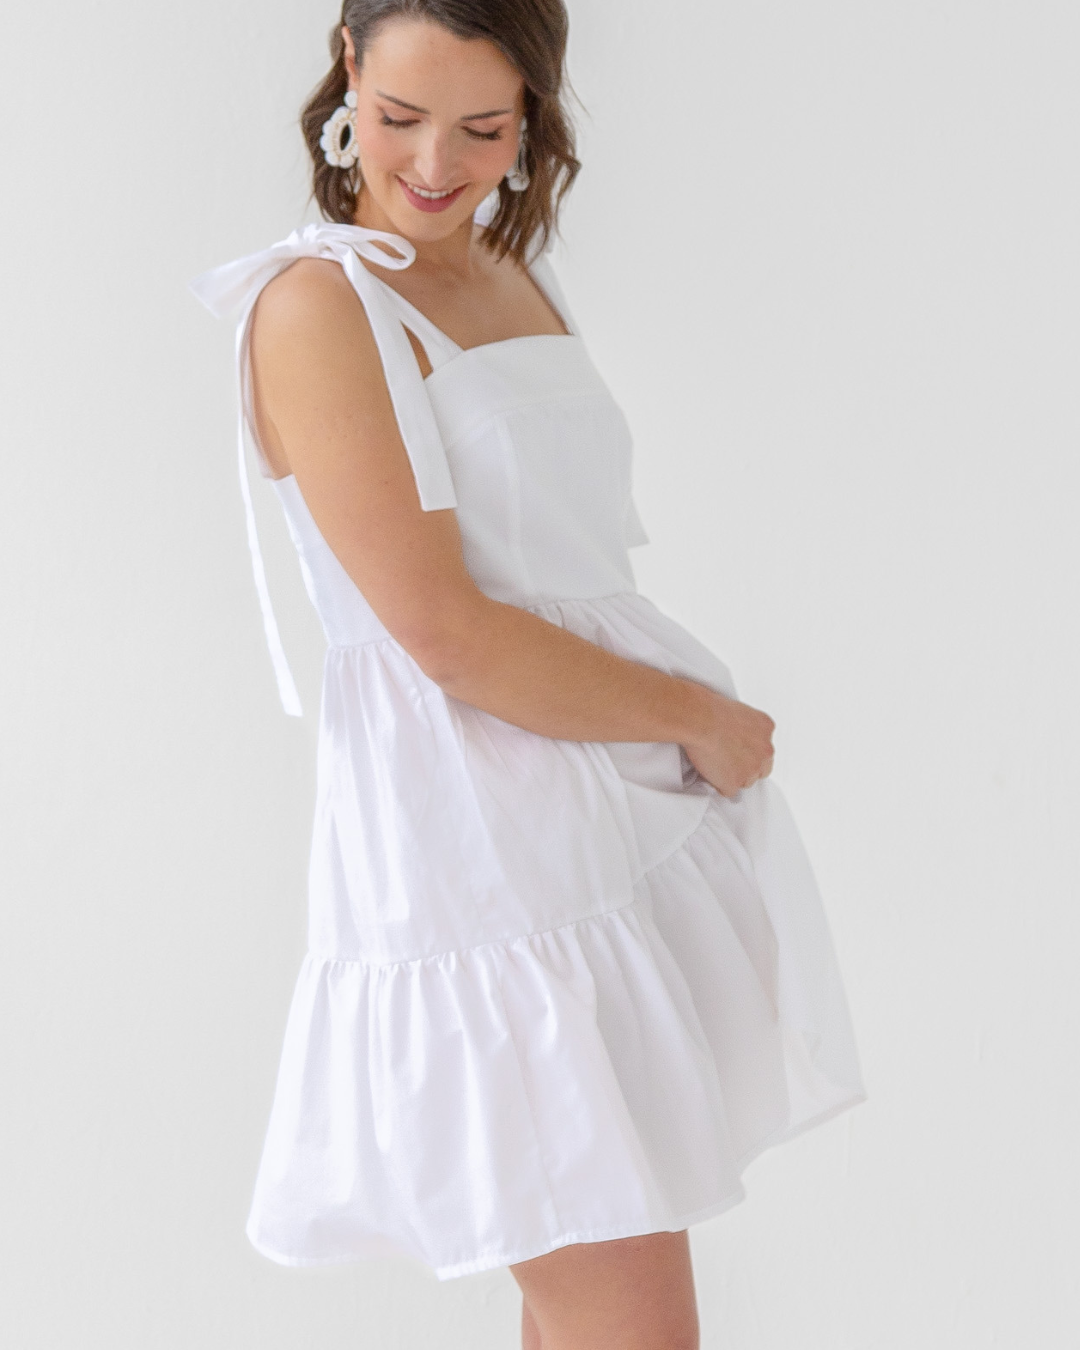 Crisp White Summer Mini Dress